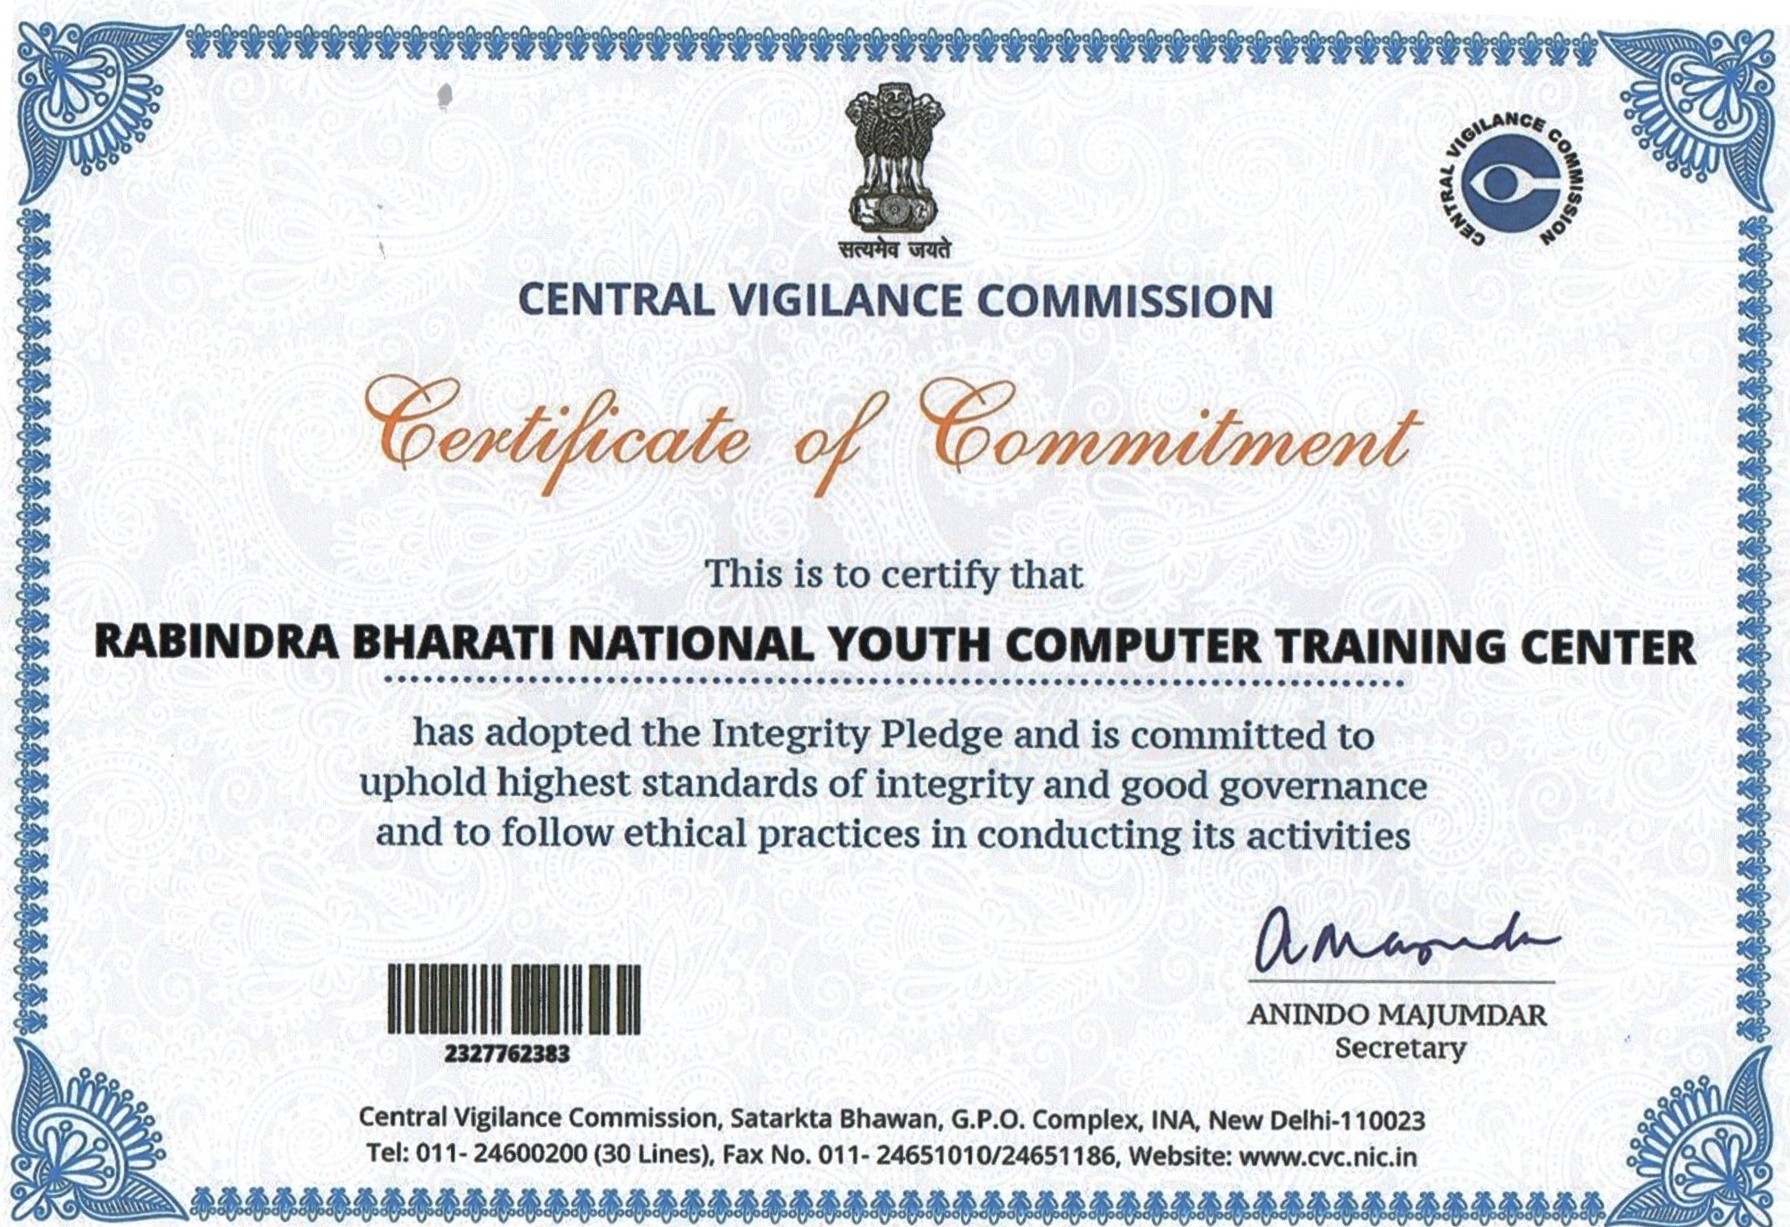 Rabindrabharati National Youth Computer Training Center